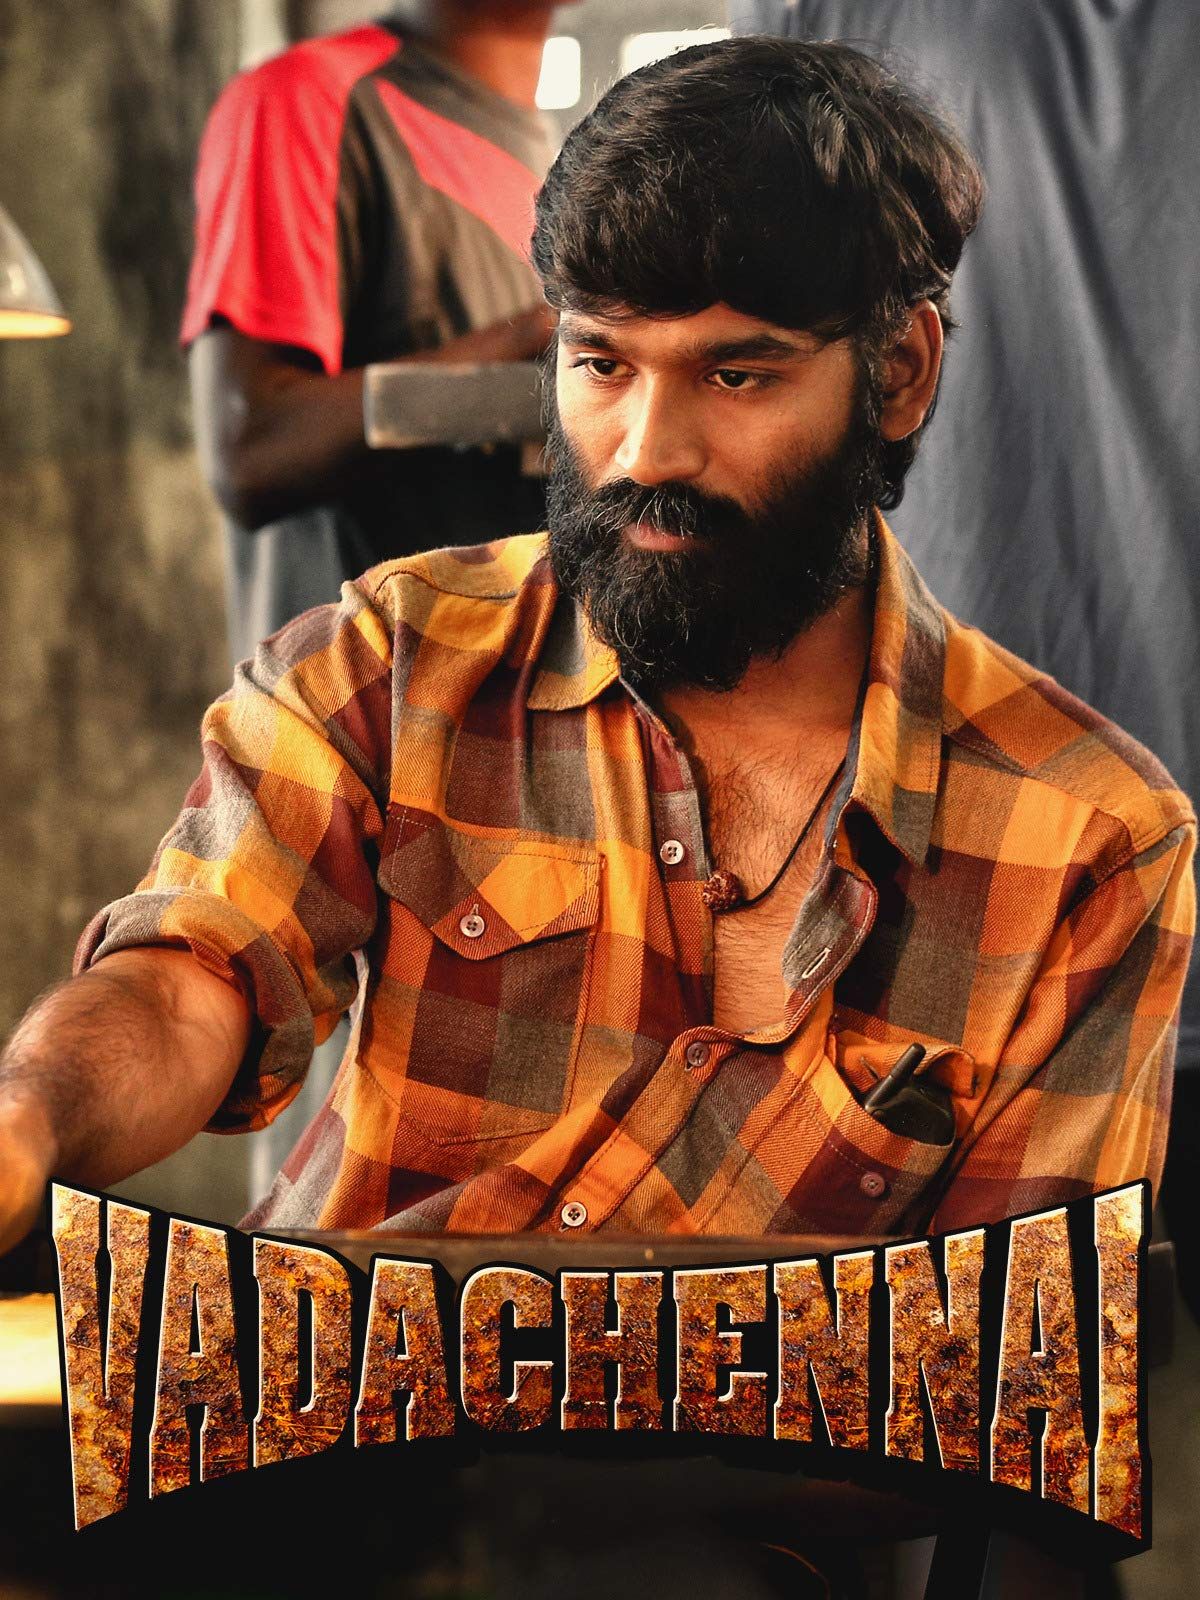 Chennai Central (Vada Chennai) 2020 HIndi Dubbed Movie download full movie